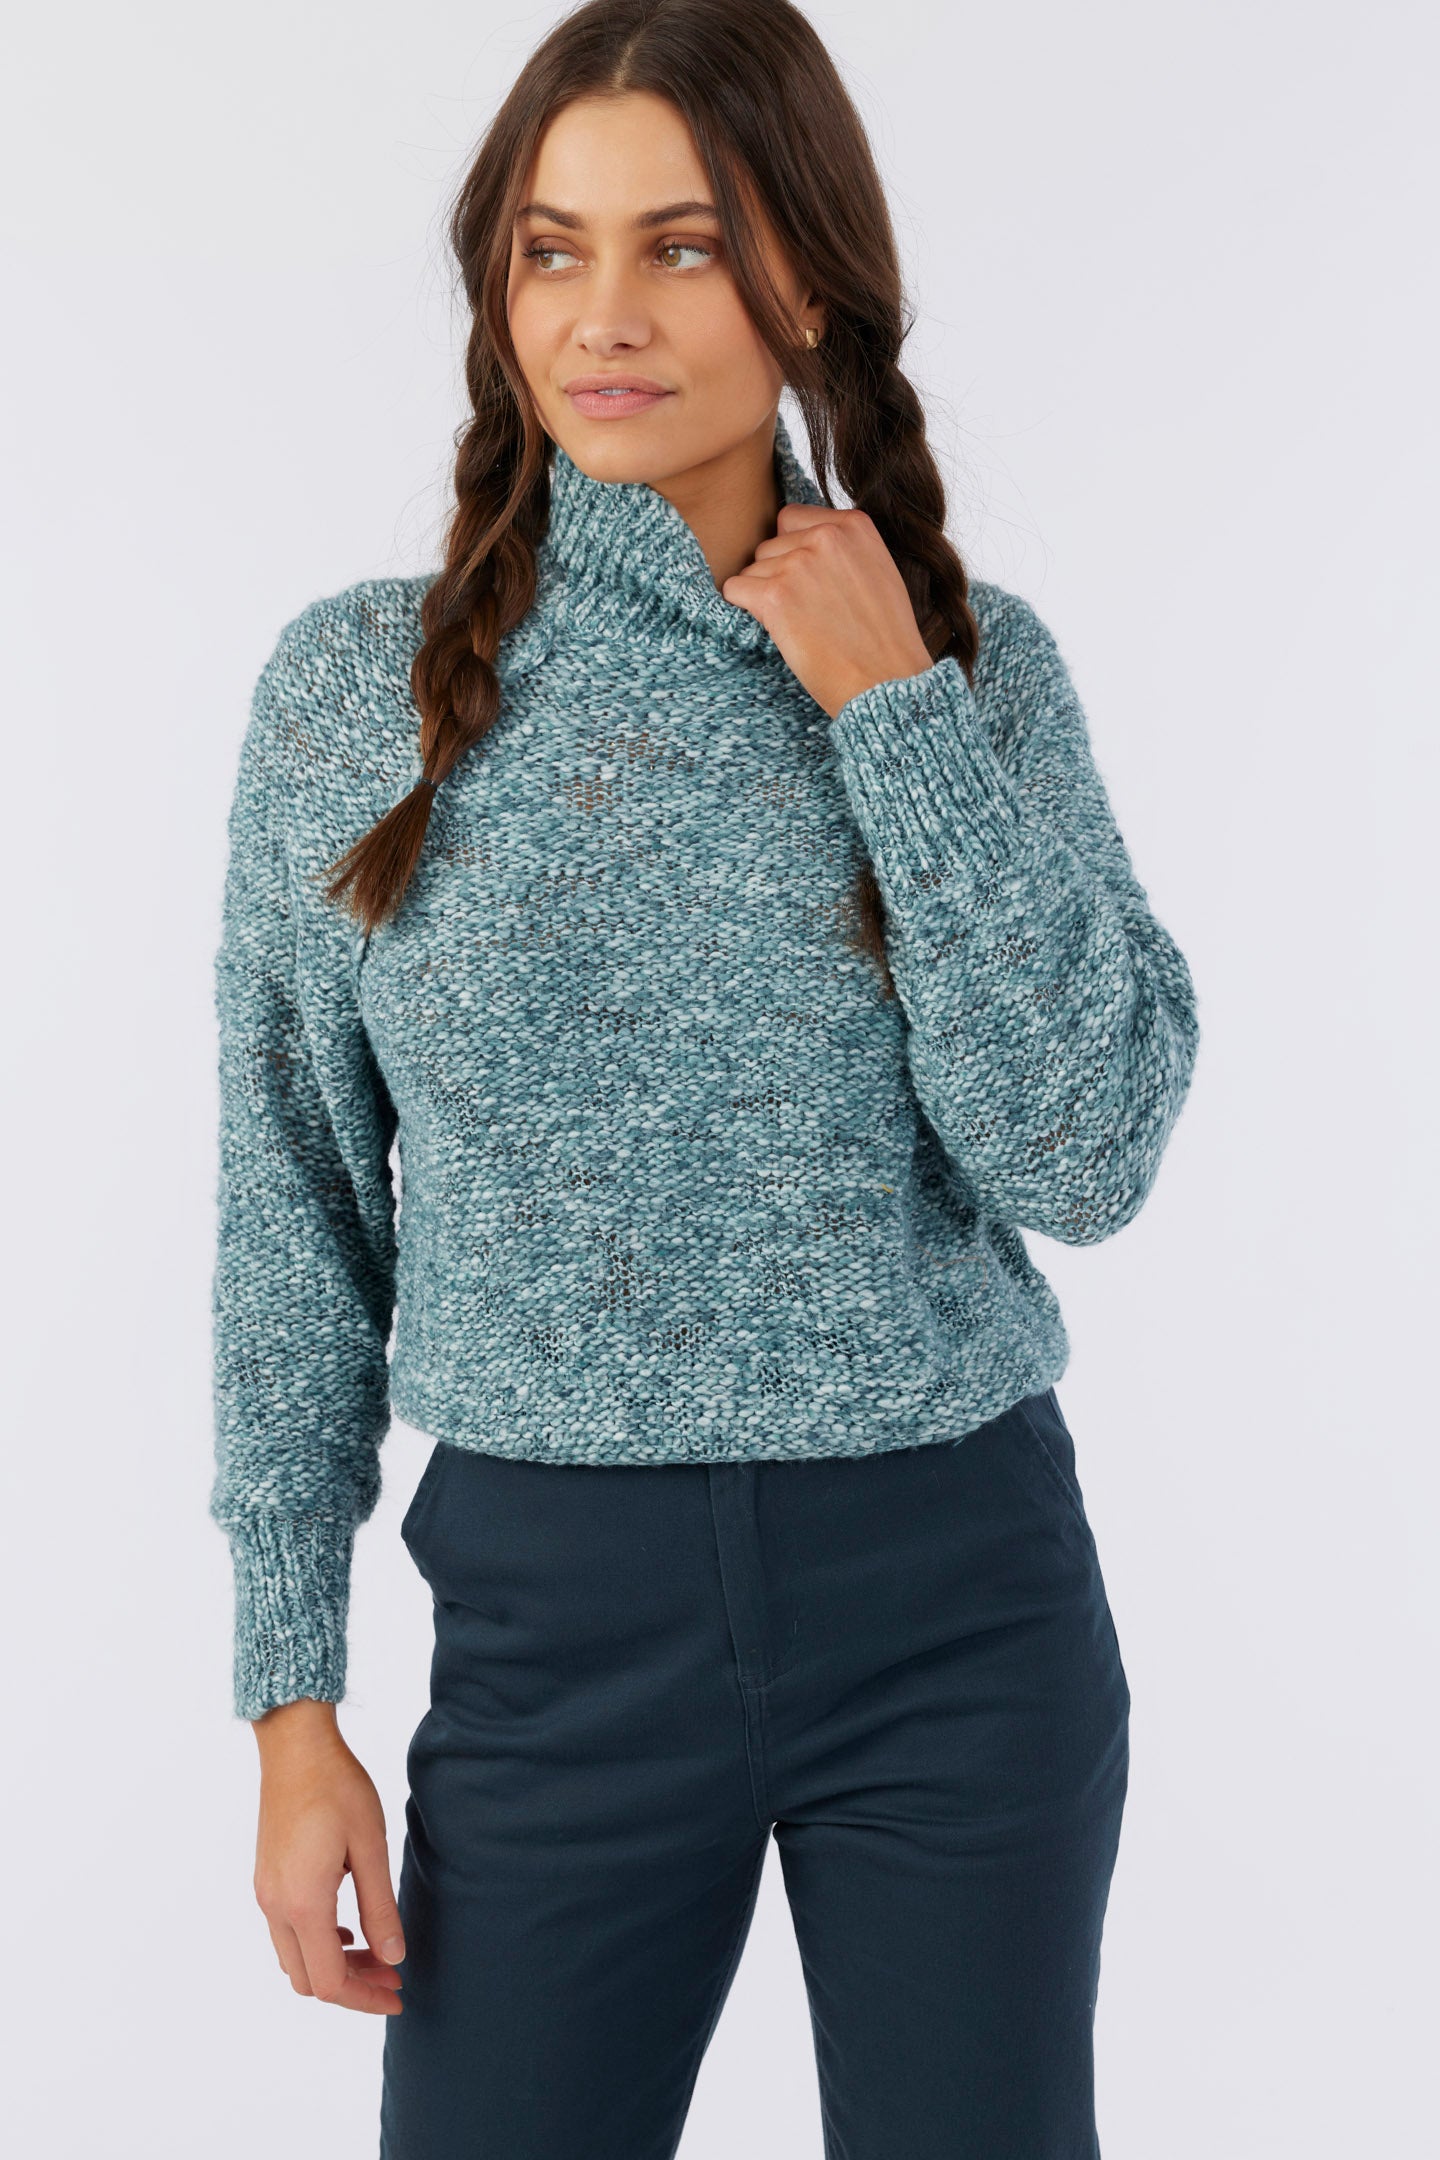 Fair Indigo Women's Organic Cotton Ribbed Turtleneck Sweater (XS, Deep  Teal) at  Women's Clothing store